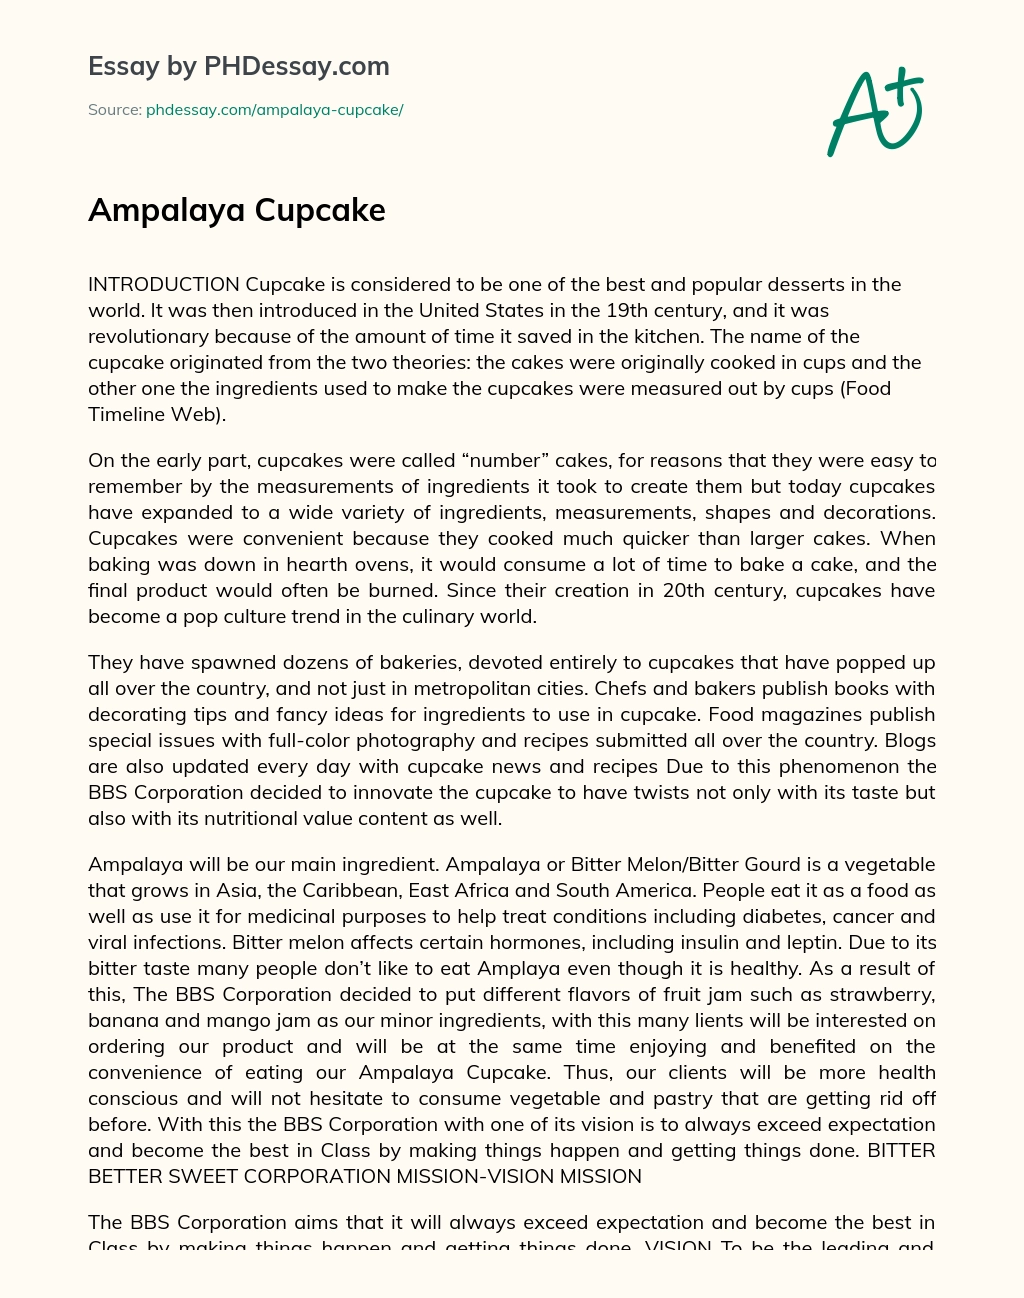 Ampalaya Cupcake essay